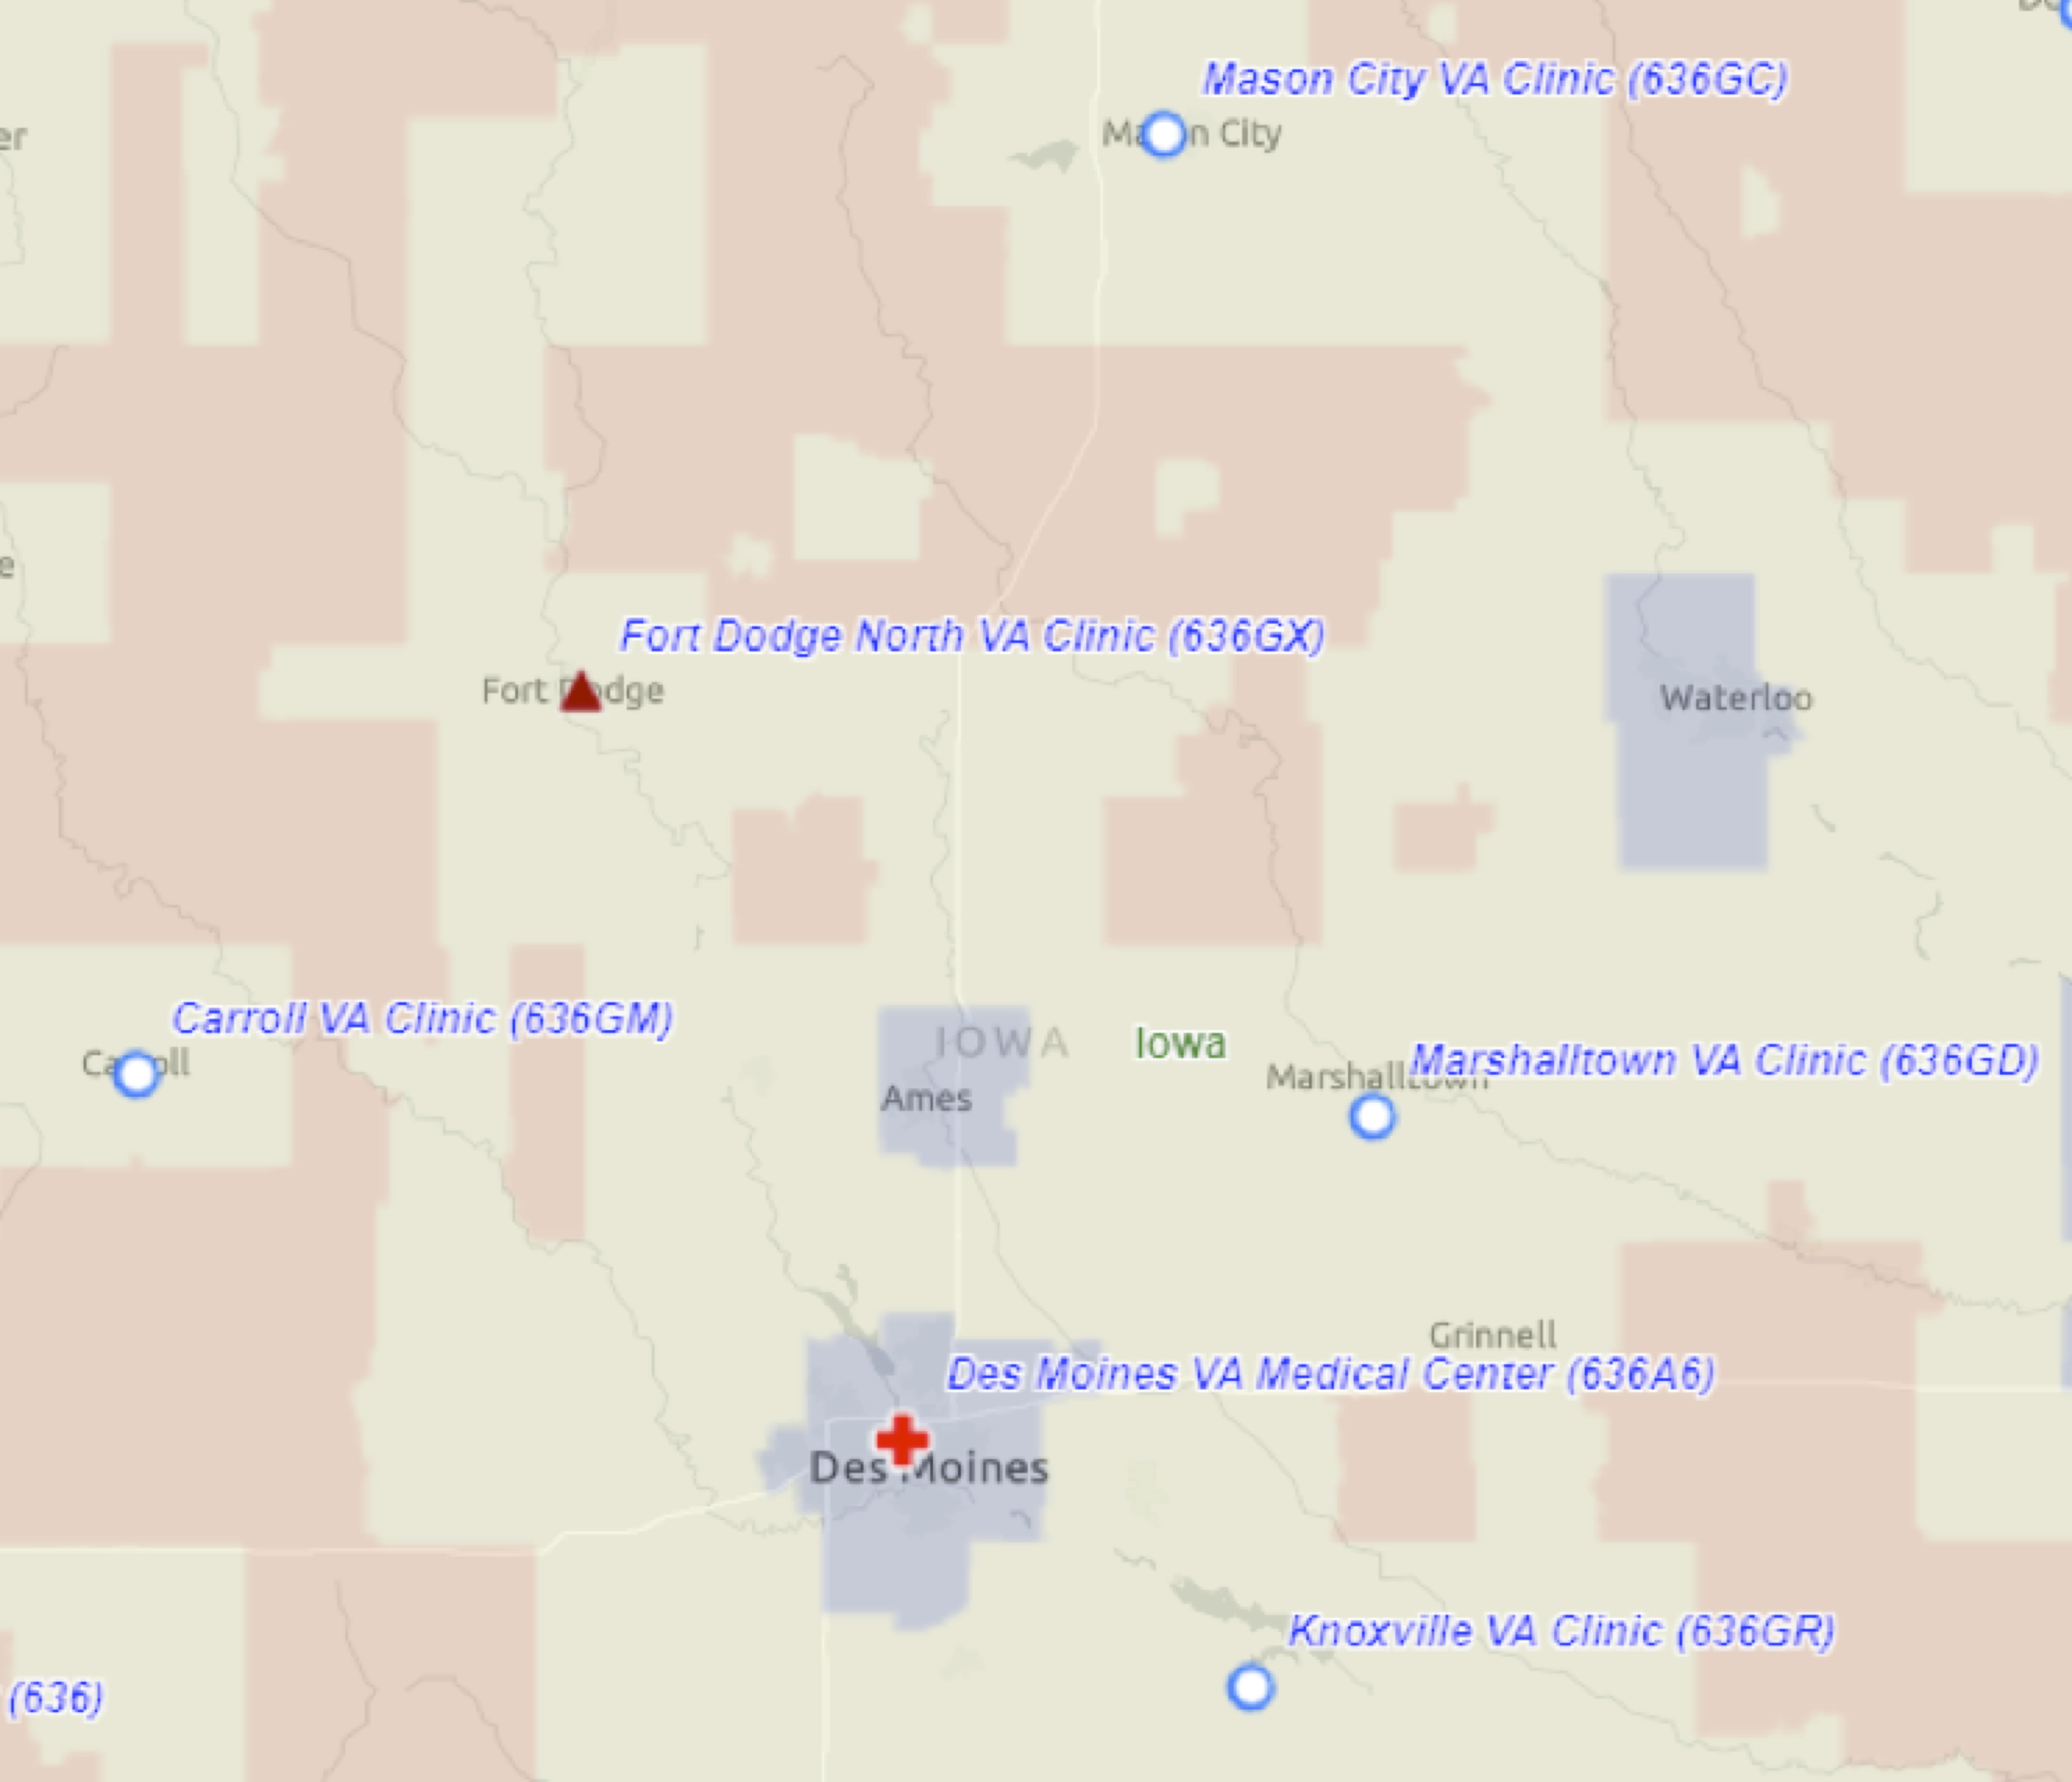 Map of Central Iowa including VA facilities